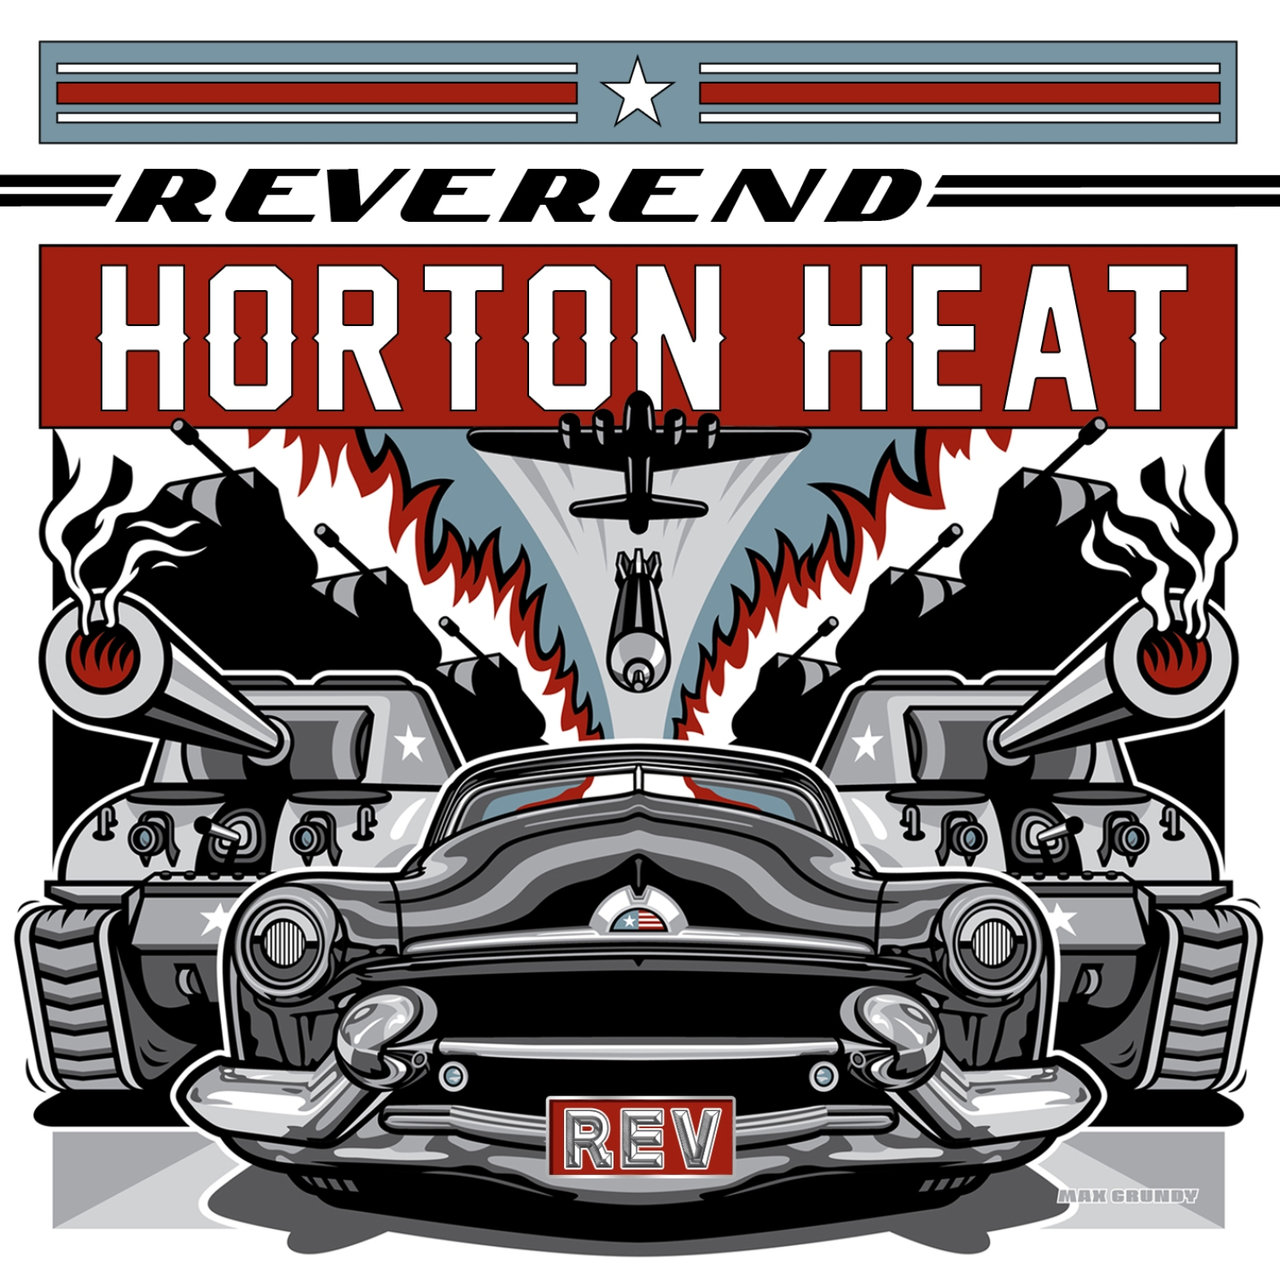 The Reverend Horton Heat - 2014 - Rev